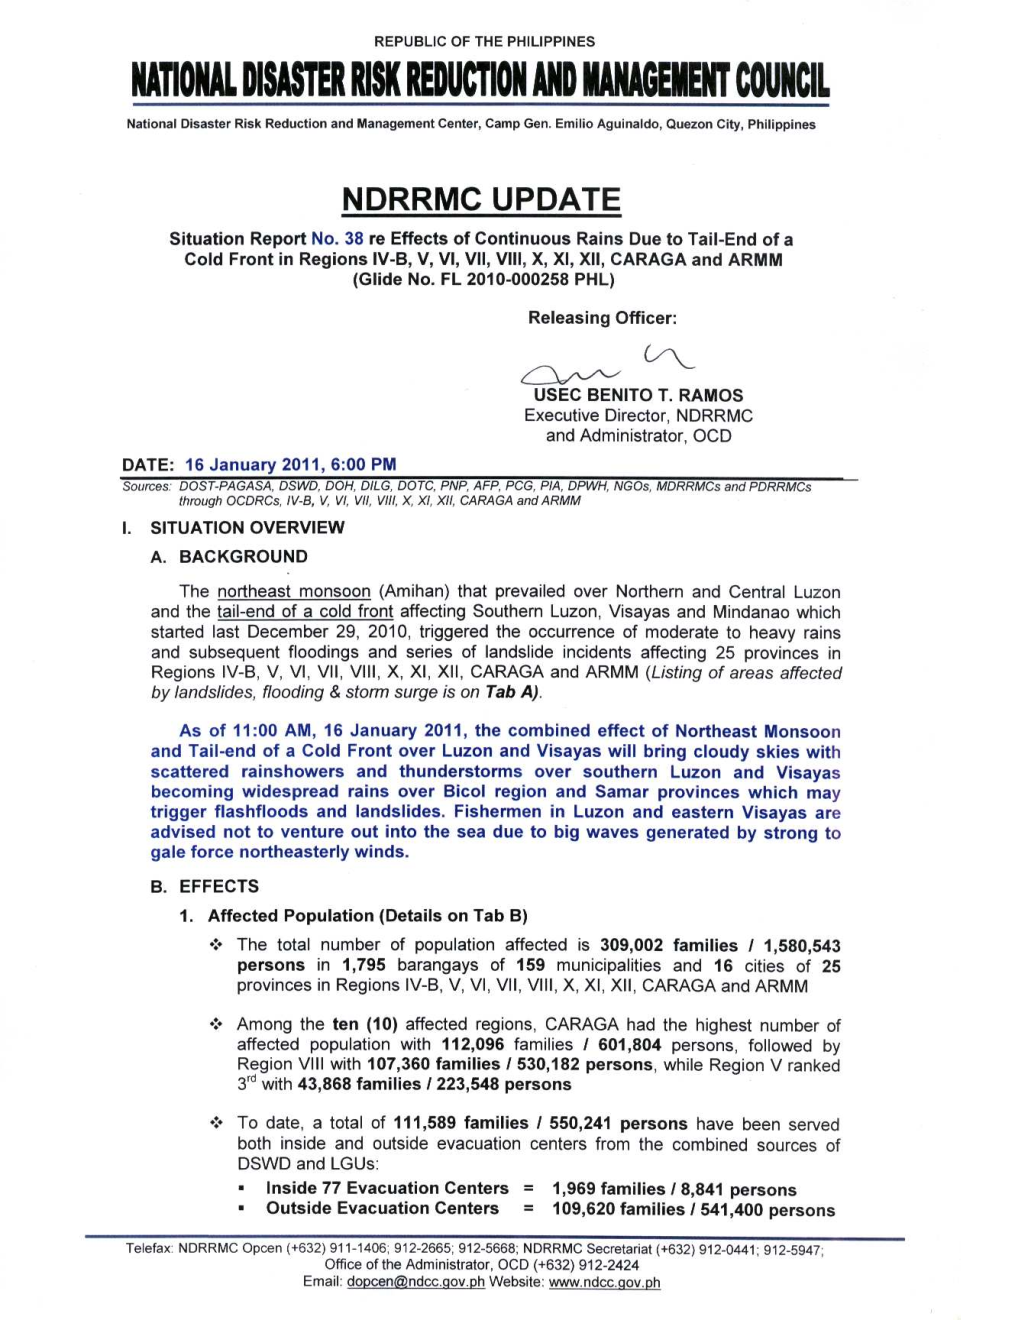 NDRRMC Update Sitrep No. 38 Flooding & Landslides 16Jan2011-6PM